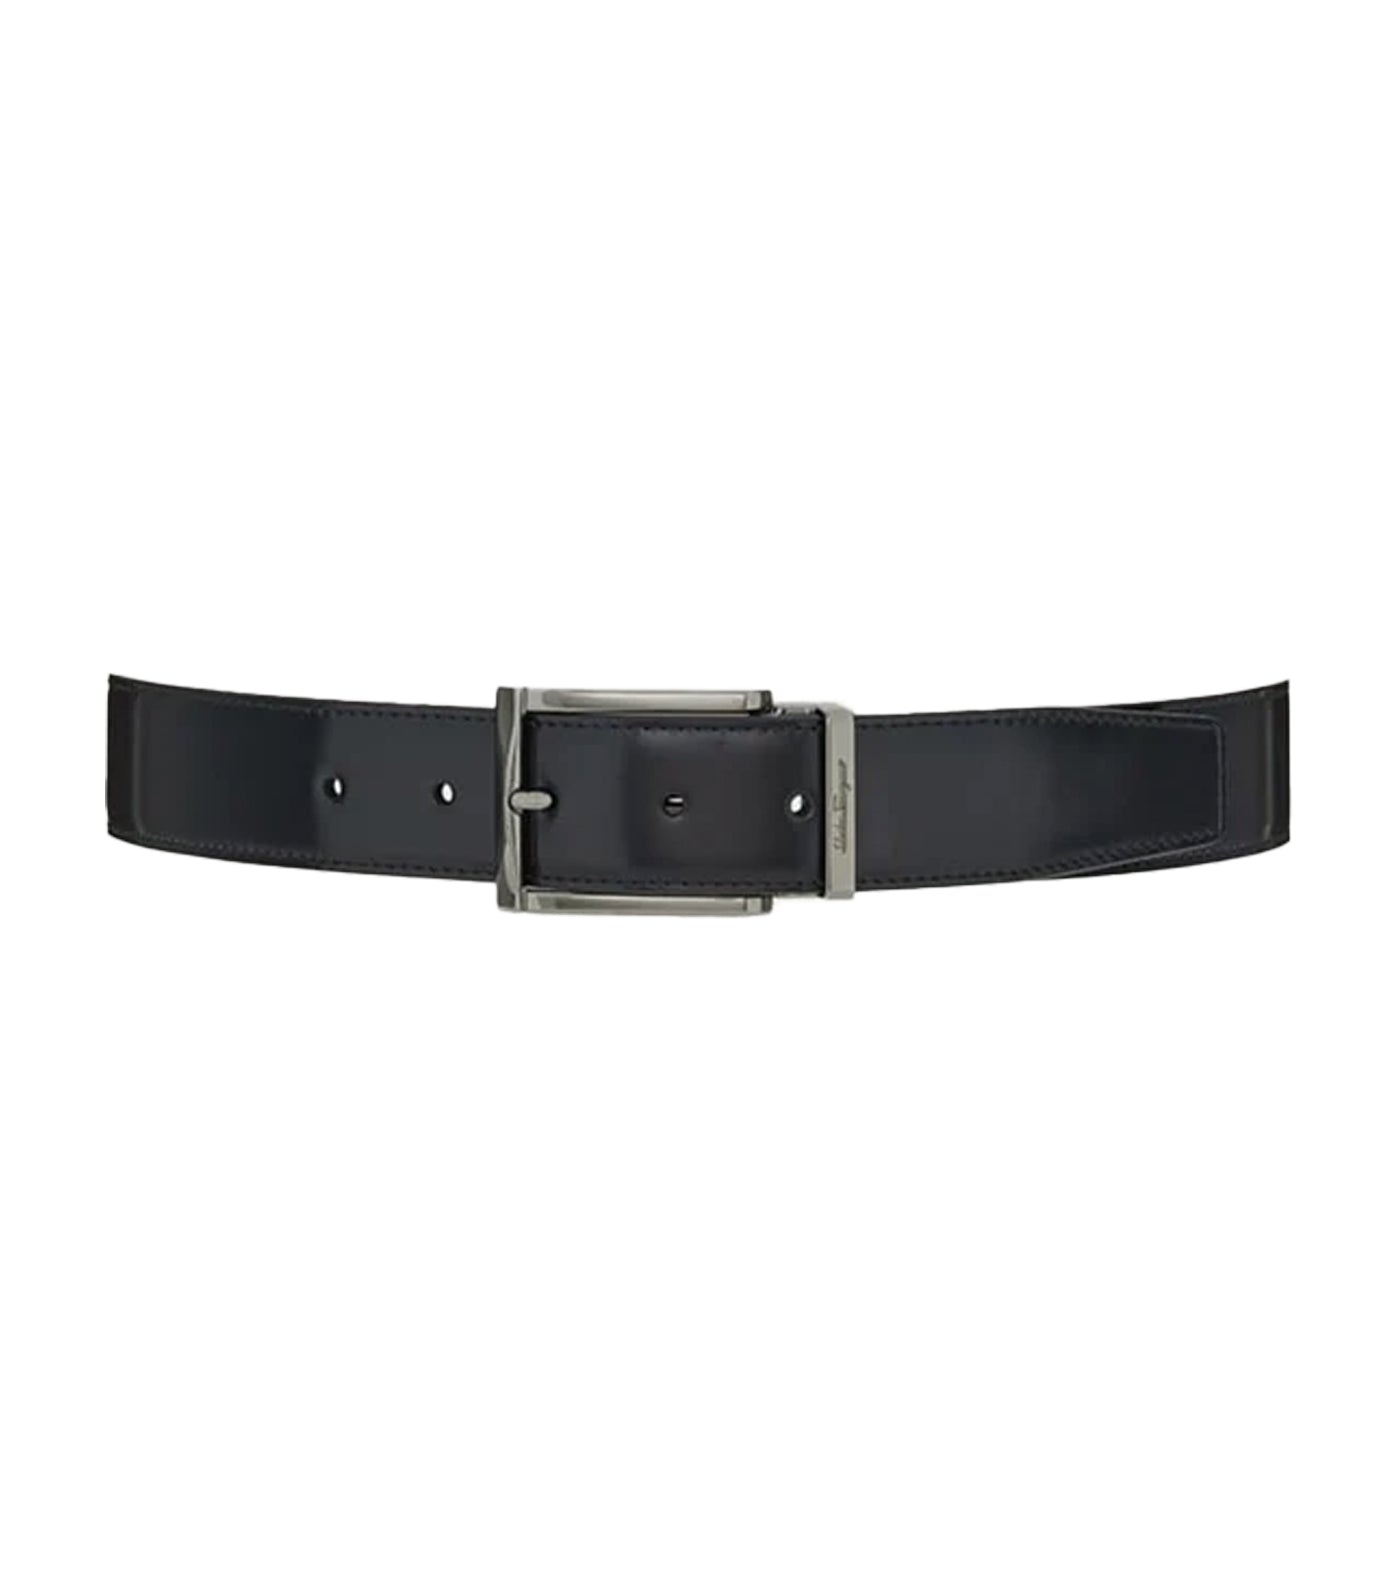 Adjustable and Reversible Rectangular Buckle Belt Black/Cappuccino